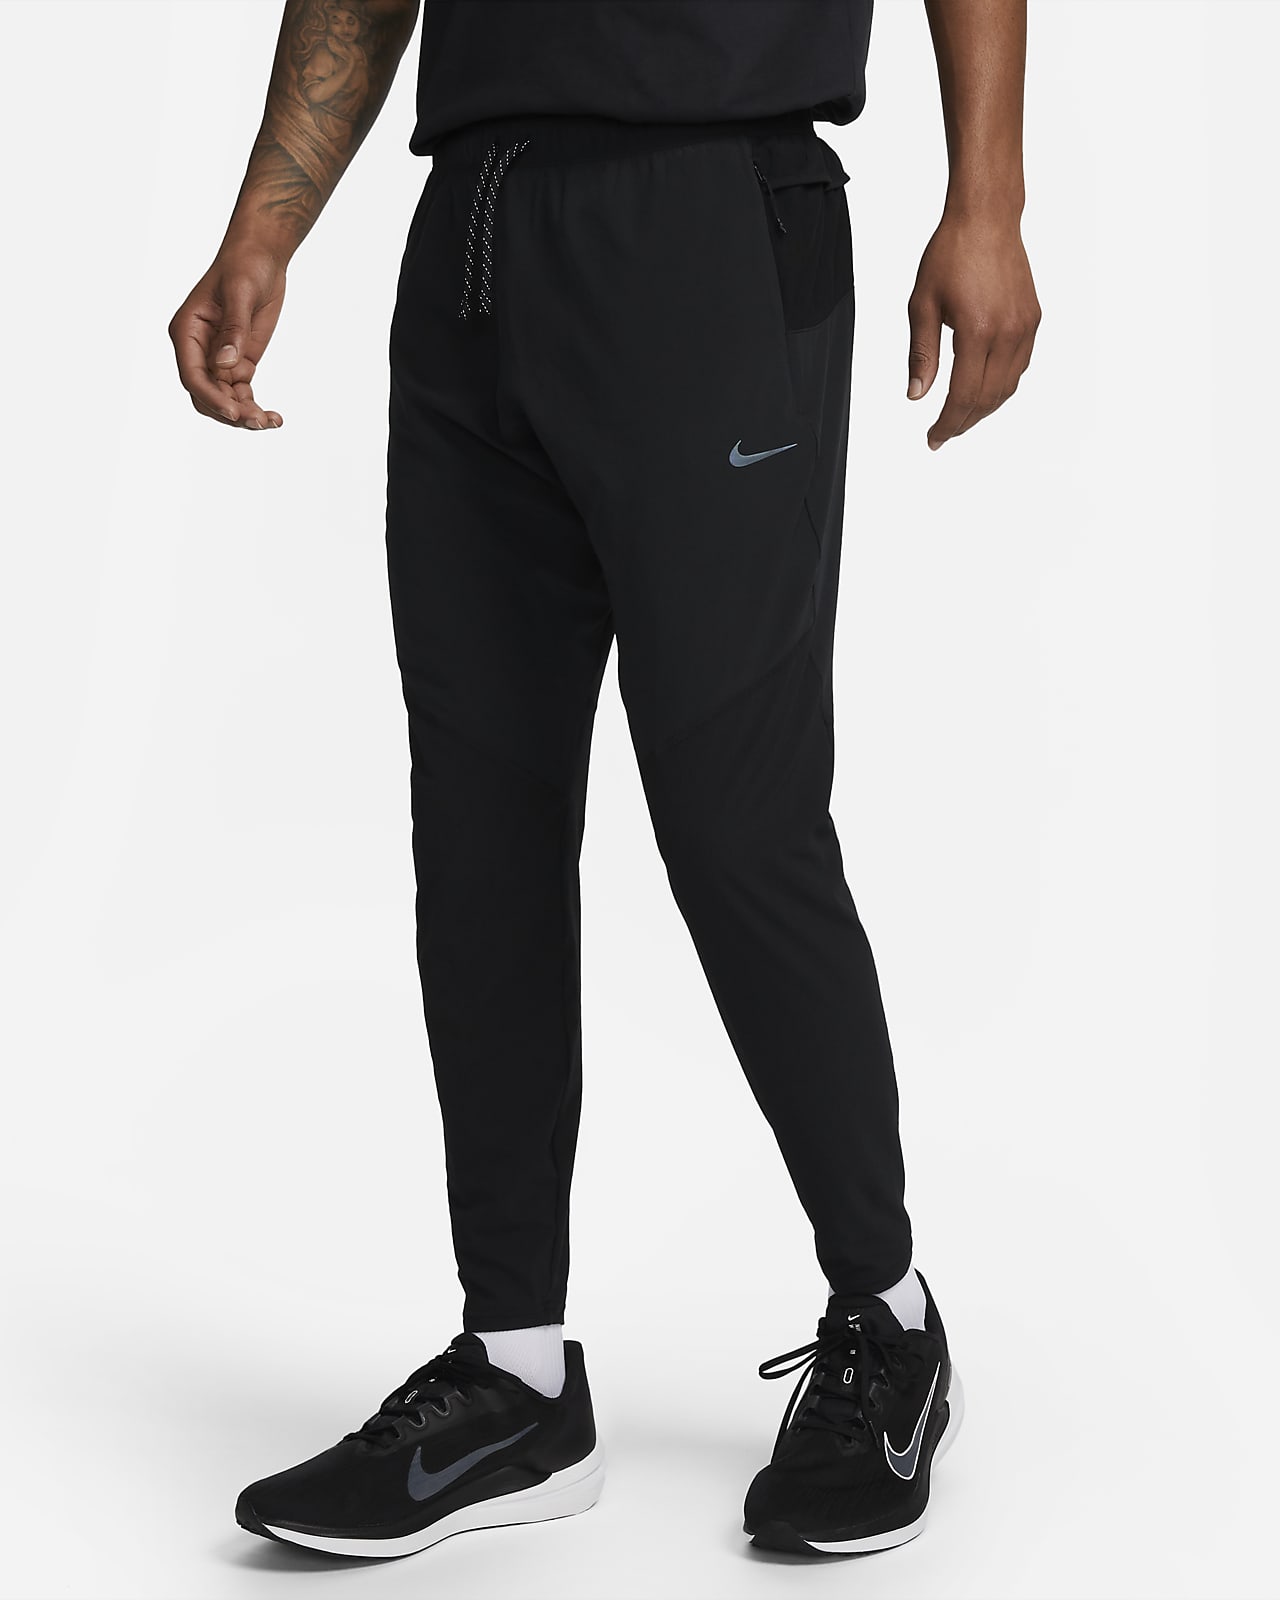 NIKE Men's Black Gym Track Pants